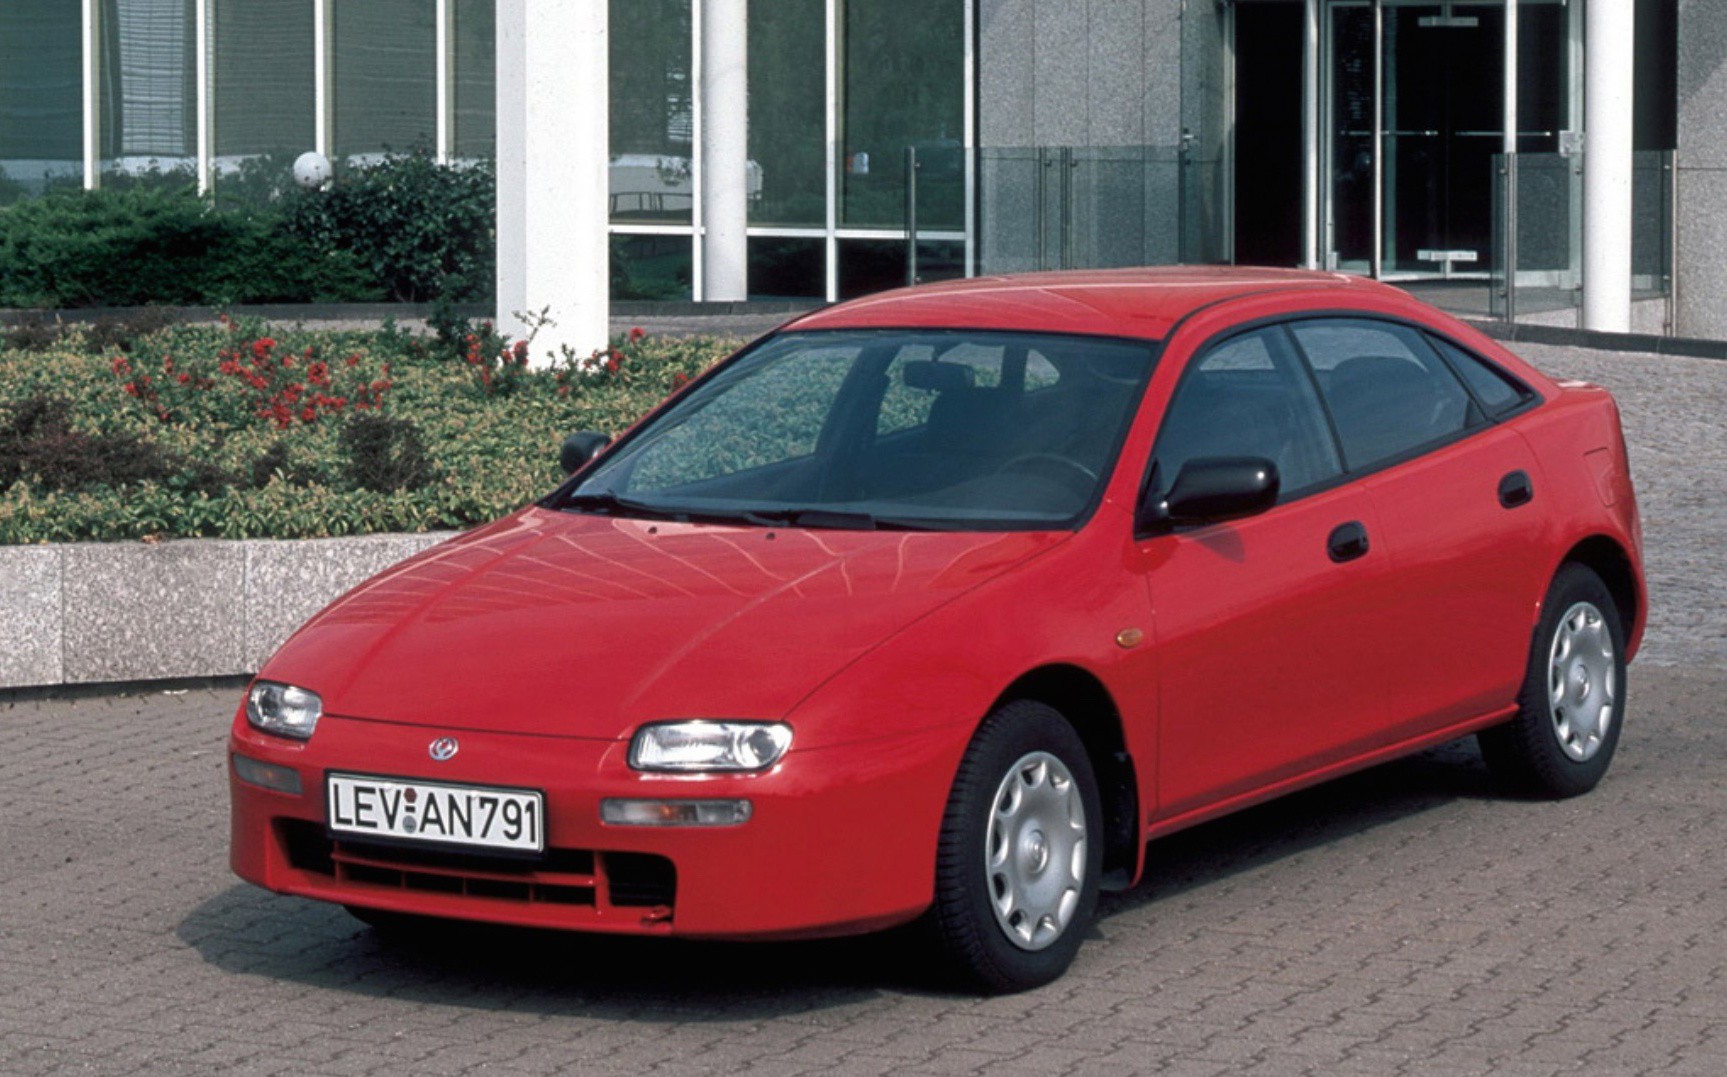 Tapis voiture 100 sur mesure pour Mazda 323 F/S 19941997